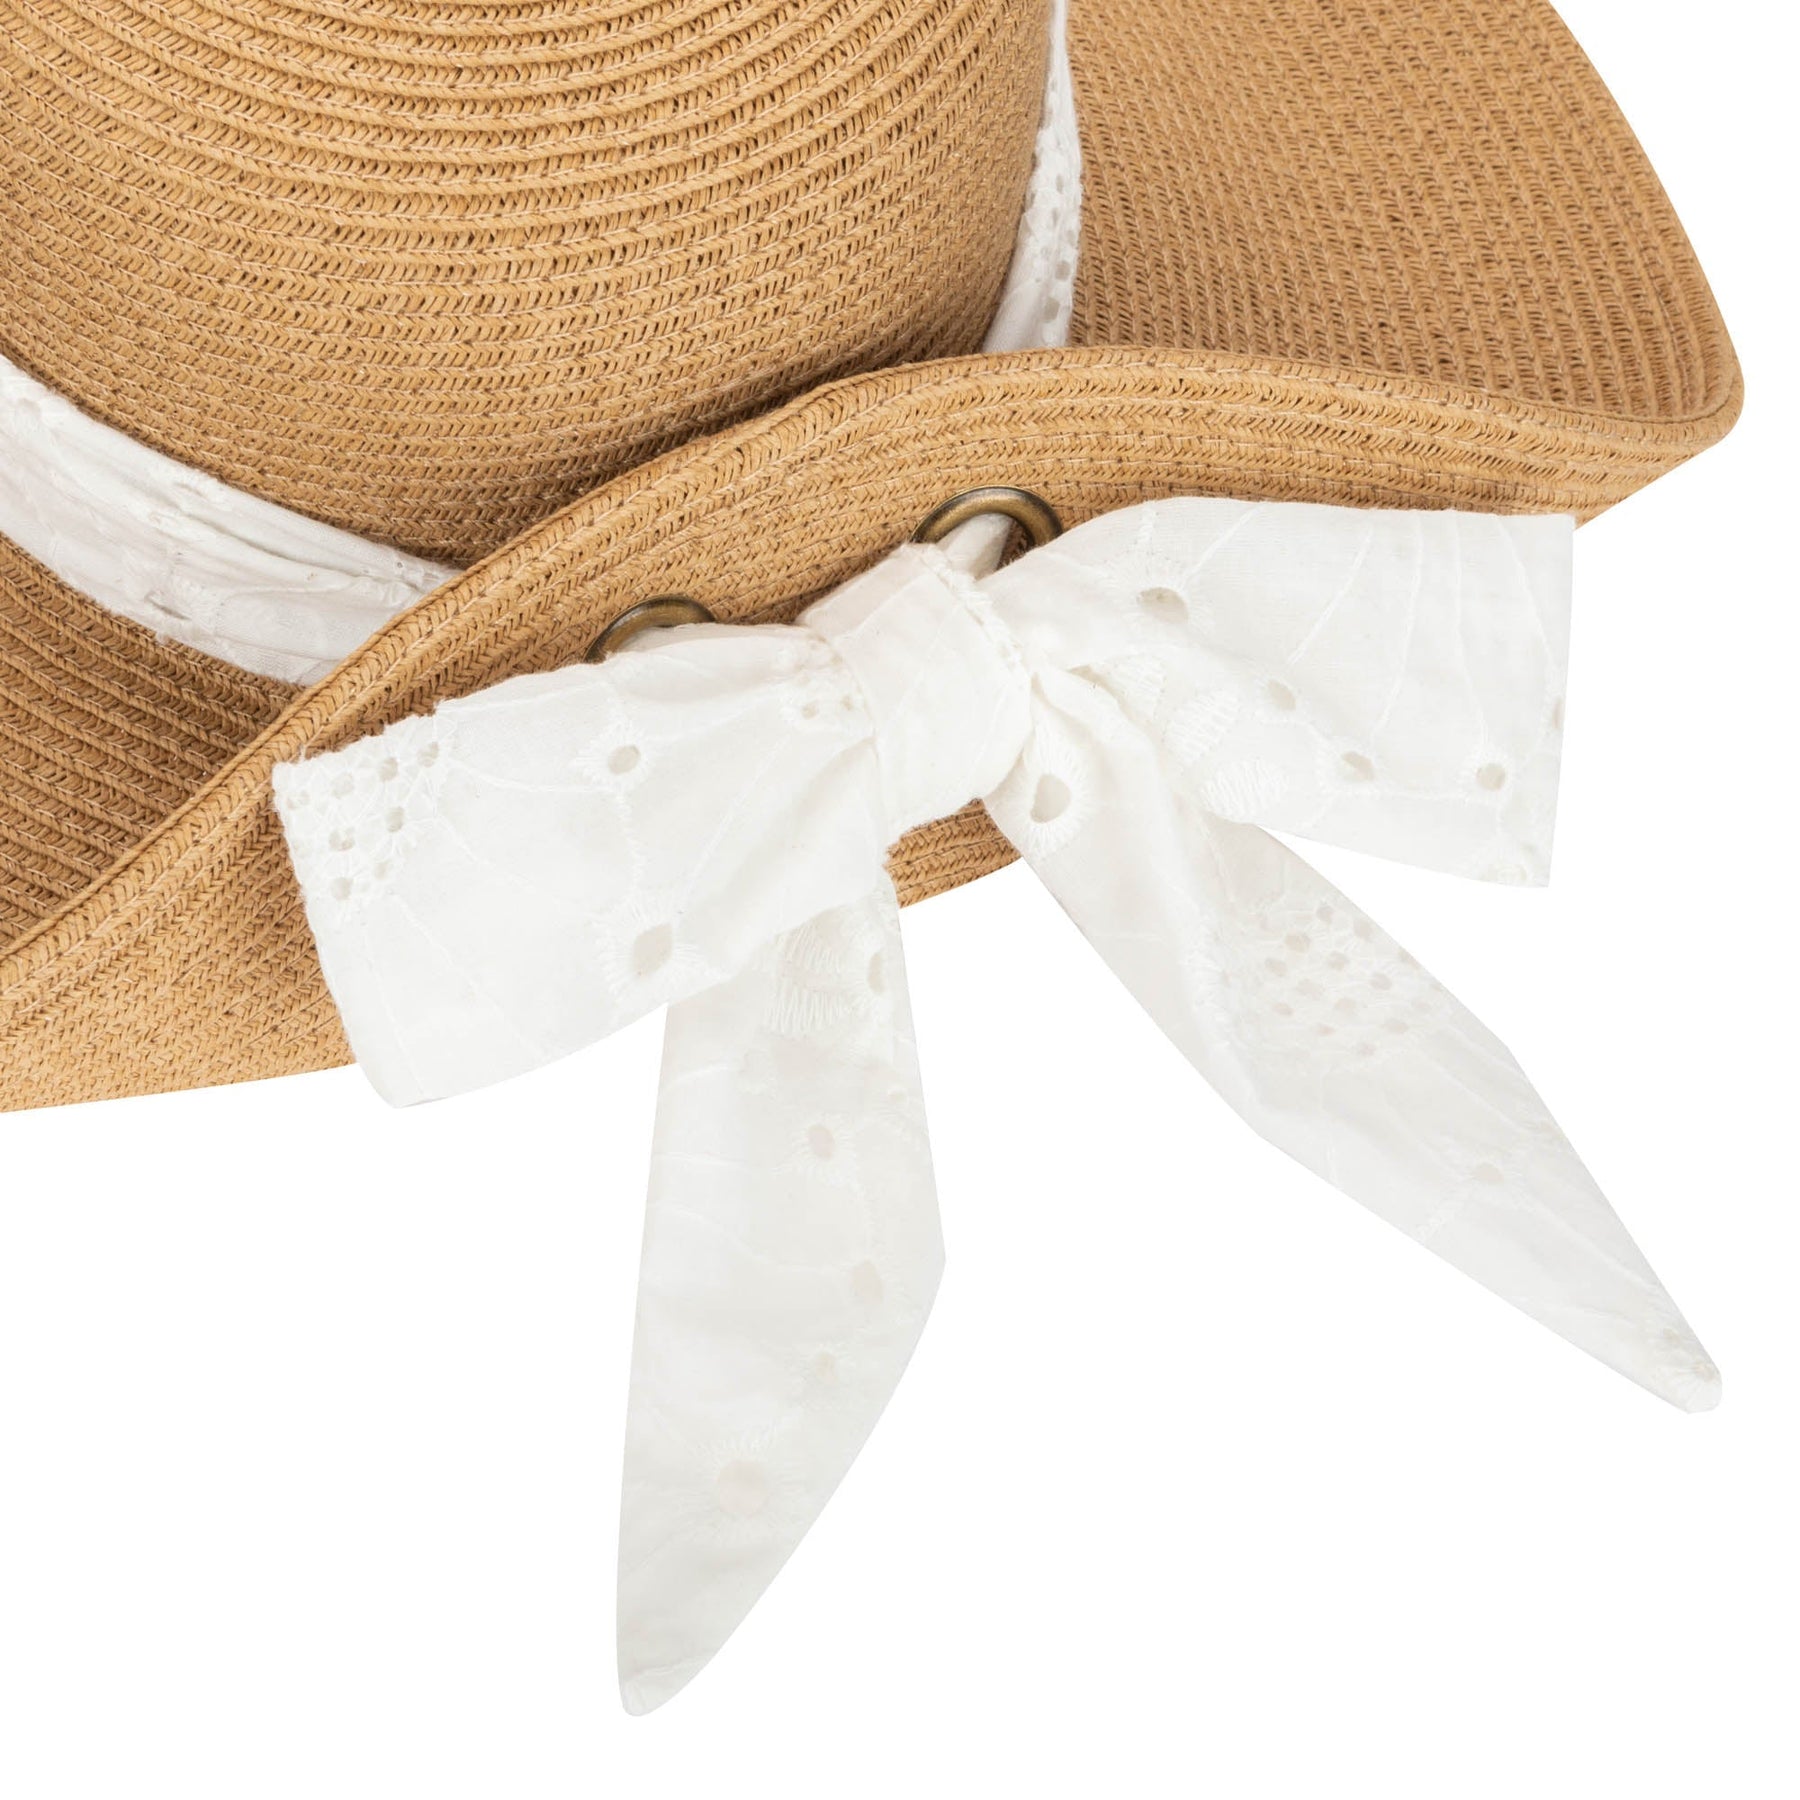 WXBDD Women's Spring/Summer Organza Bow hat, Sun Shade hat, Bowl